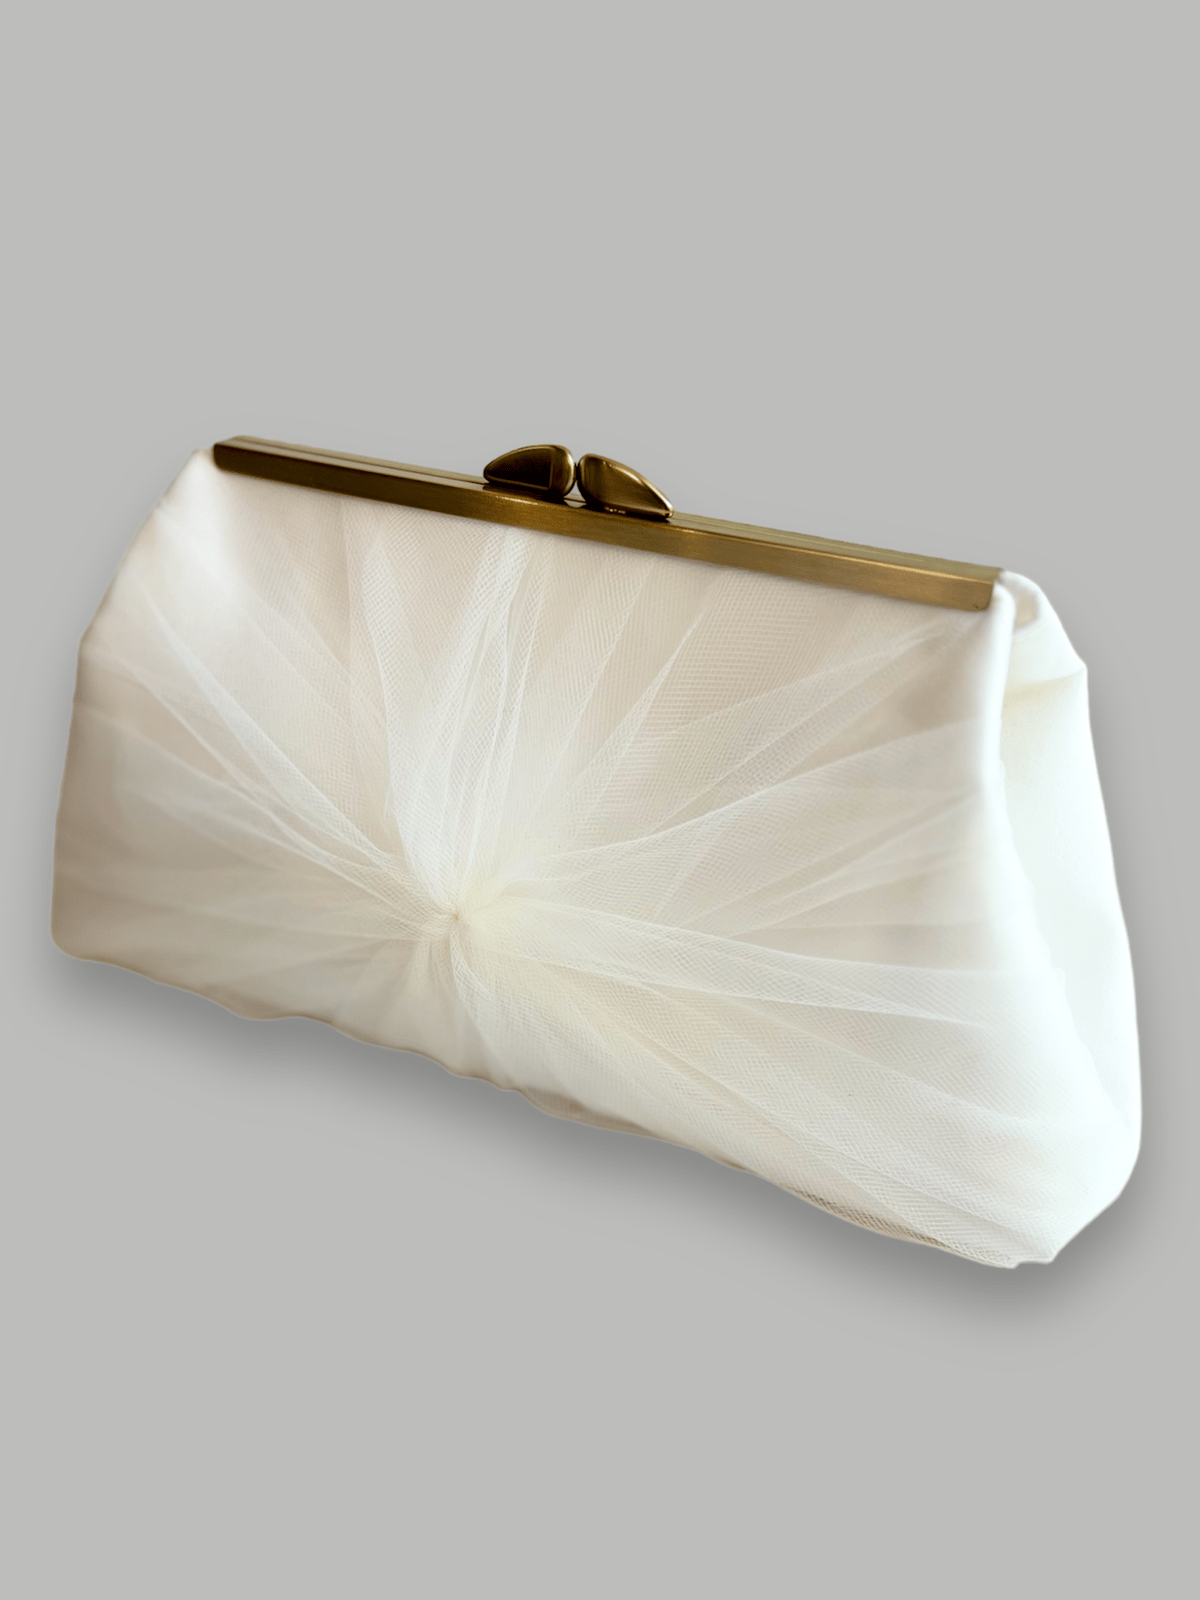 Wedding Crystal Clutch | Blue Party Wallet | Party Purse | Clutch Bag |  Handbag - Women's - Aliexpress